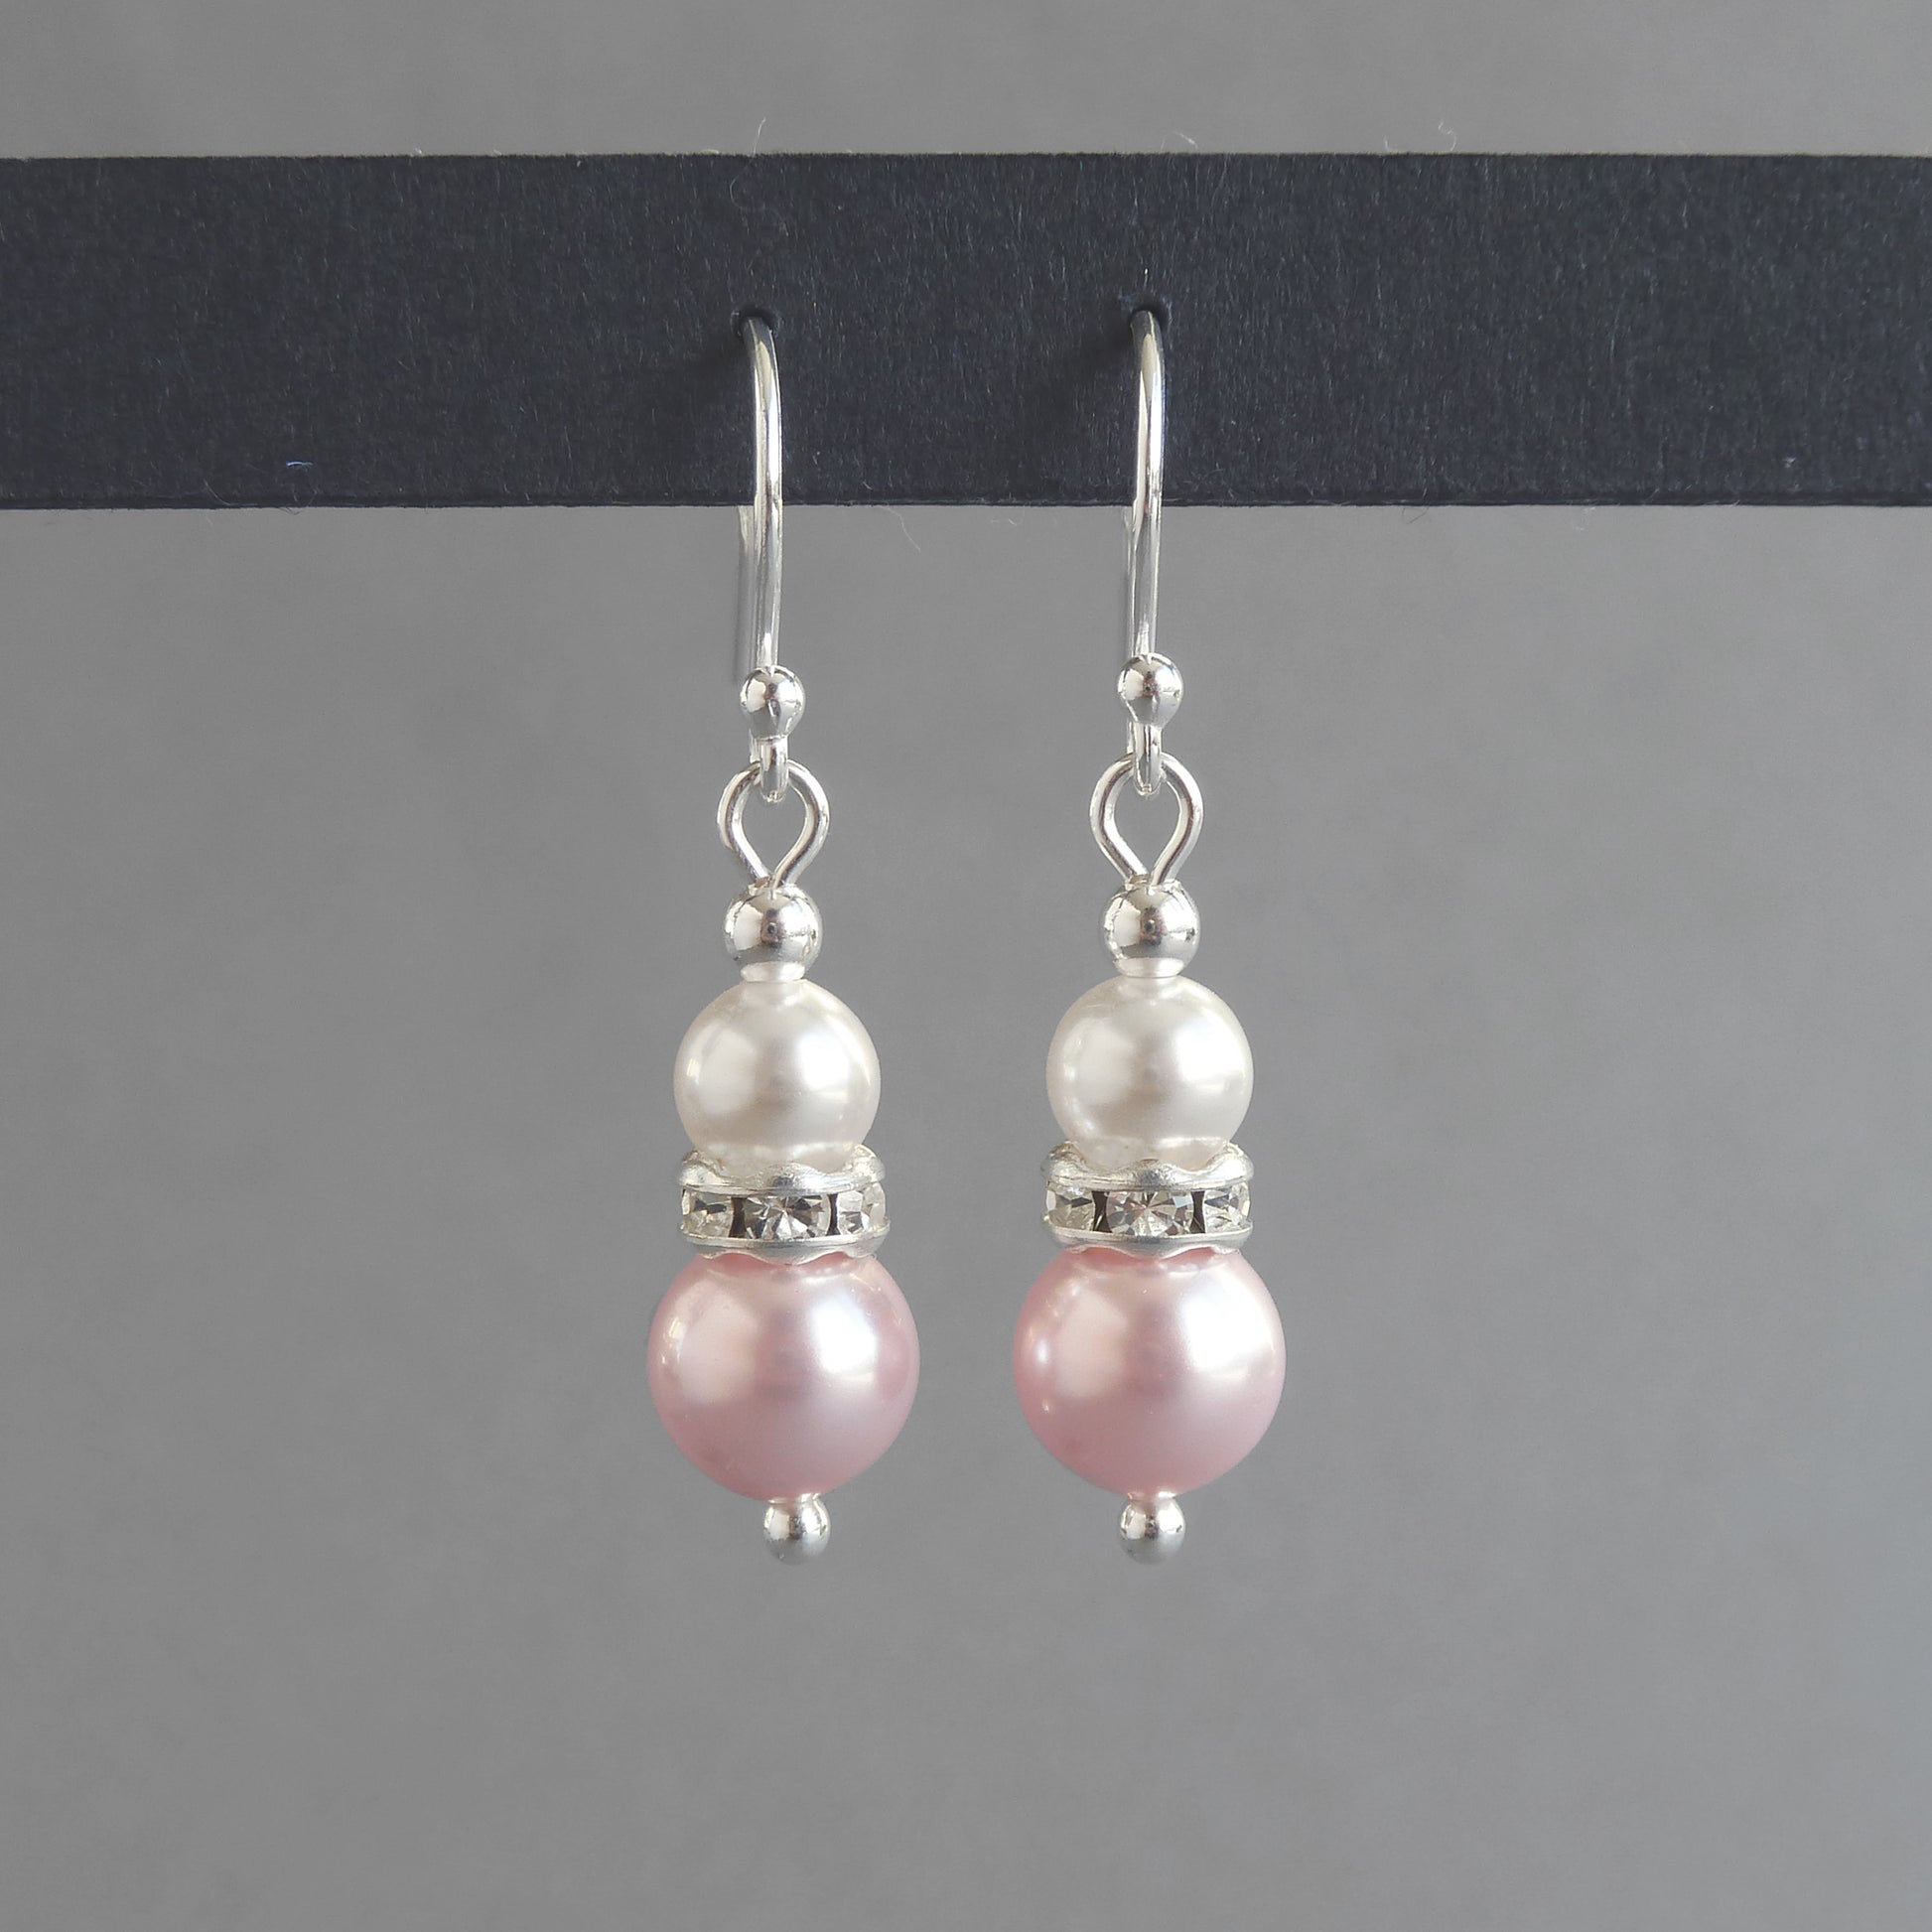 Light pink pearl bridesmaids earrings